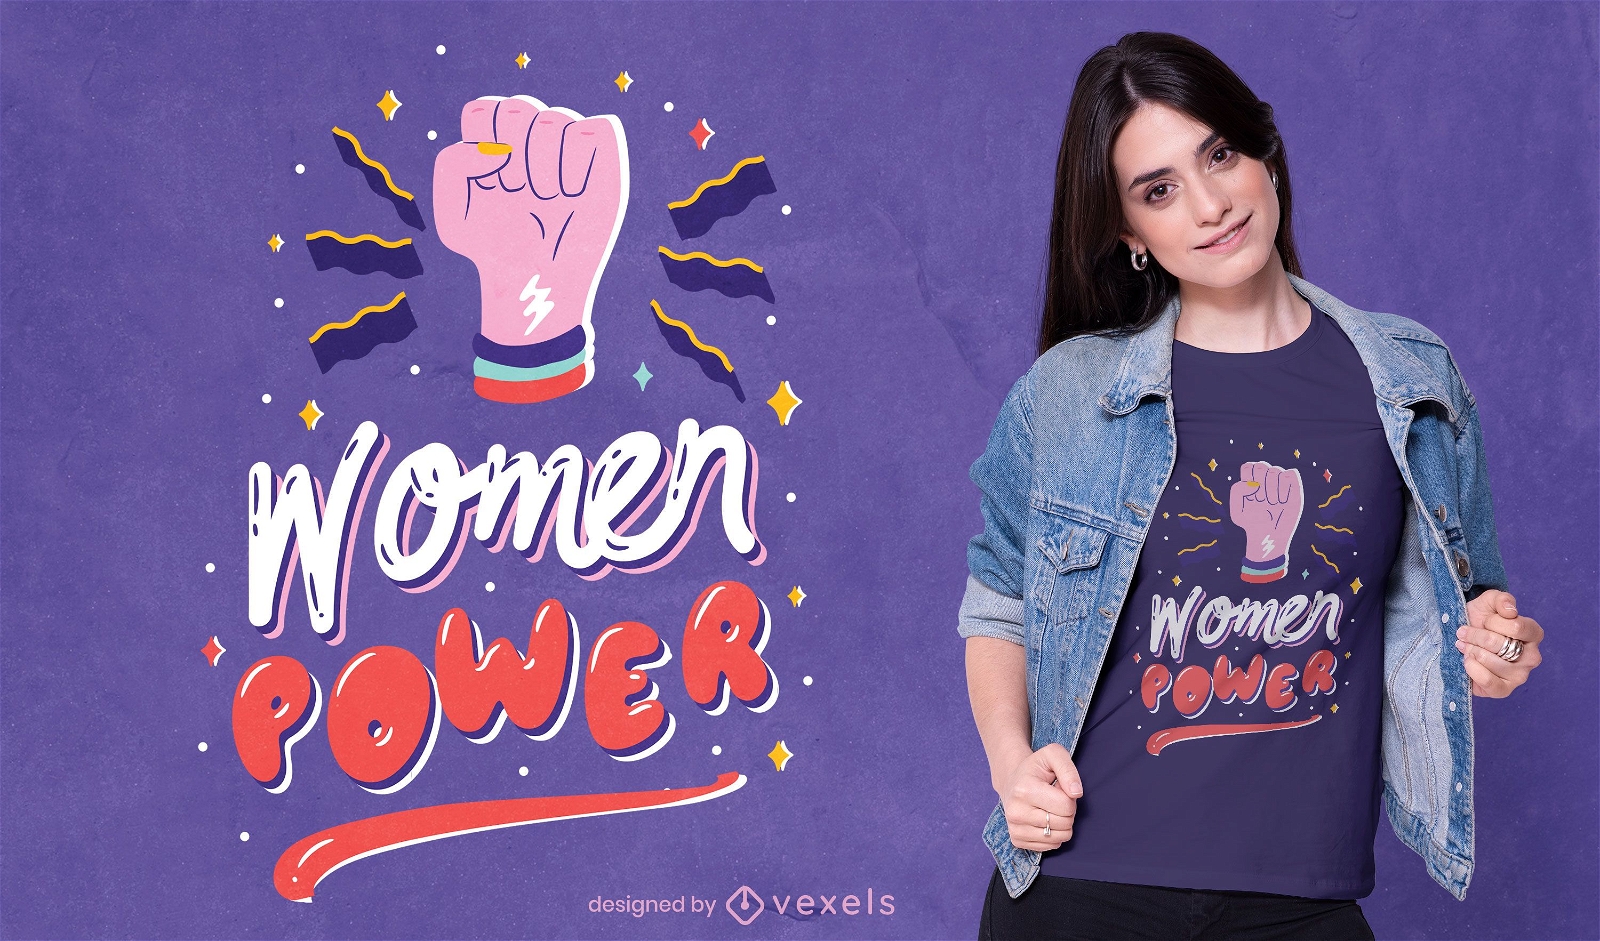 Design de camiseta feminista de poder feminino